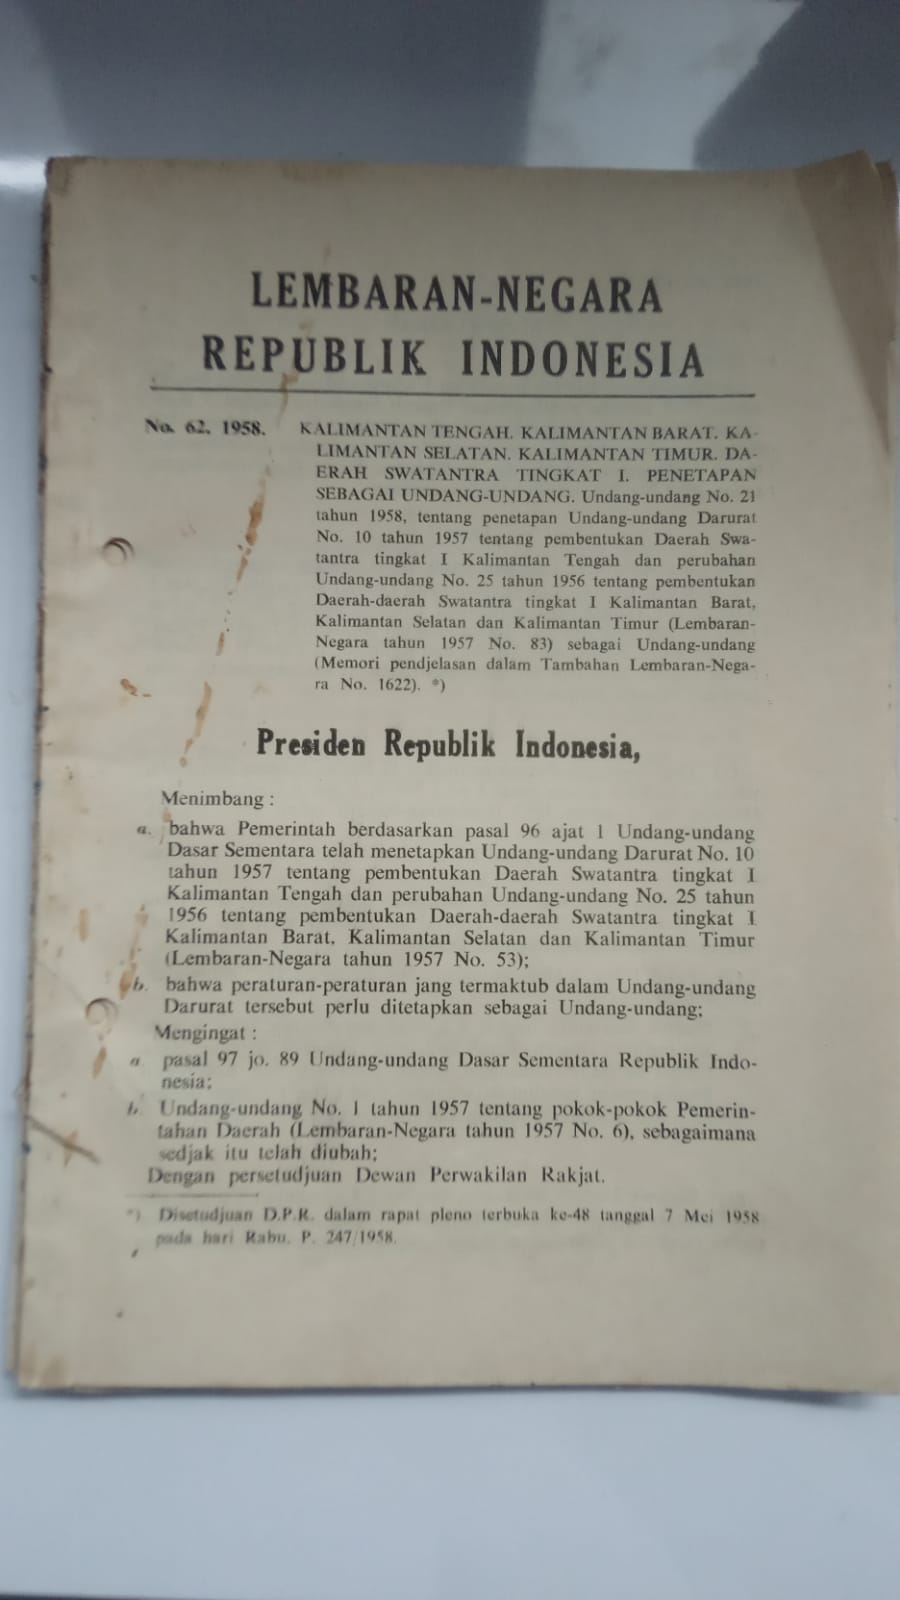 Lembaran Negara Republik Indonesia No. 62, 1958